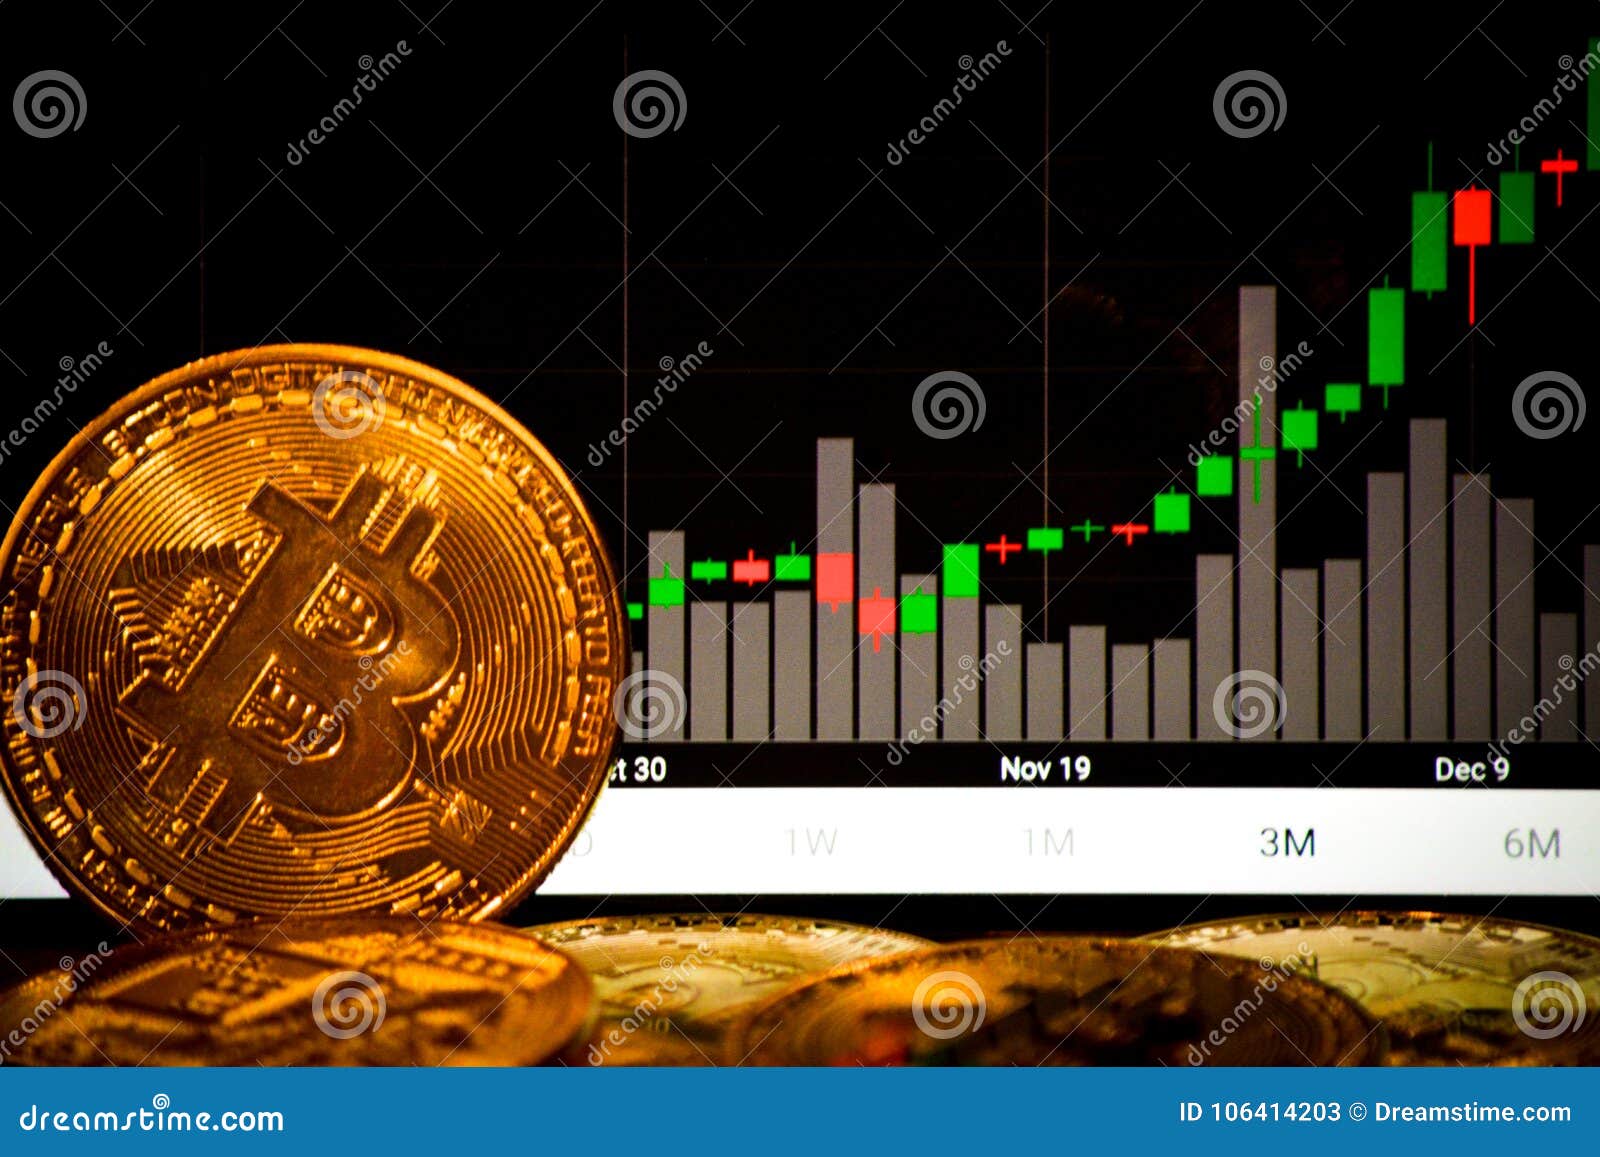 bitcoin price rising